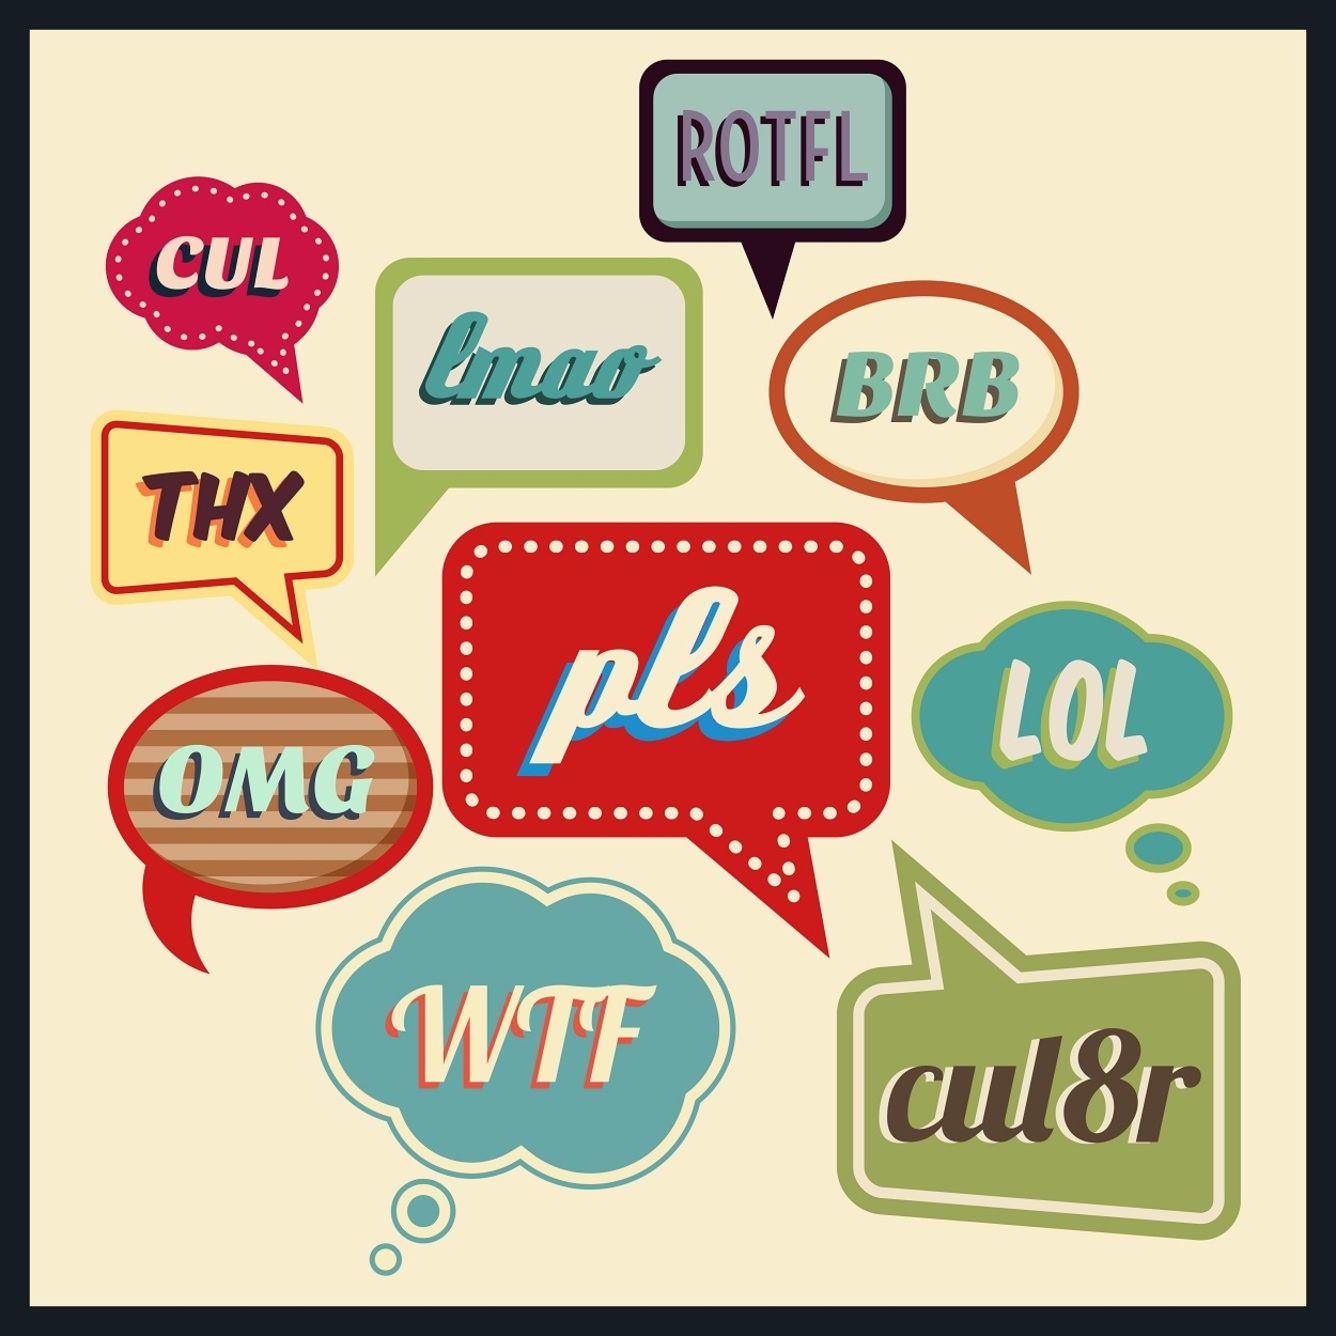 Angielskie skróty internetowe i slang internetowy - afk, ATM, brb, lol...